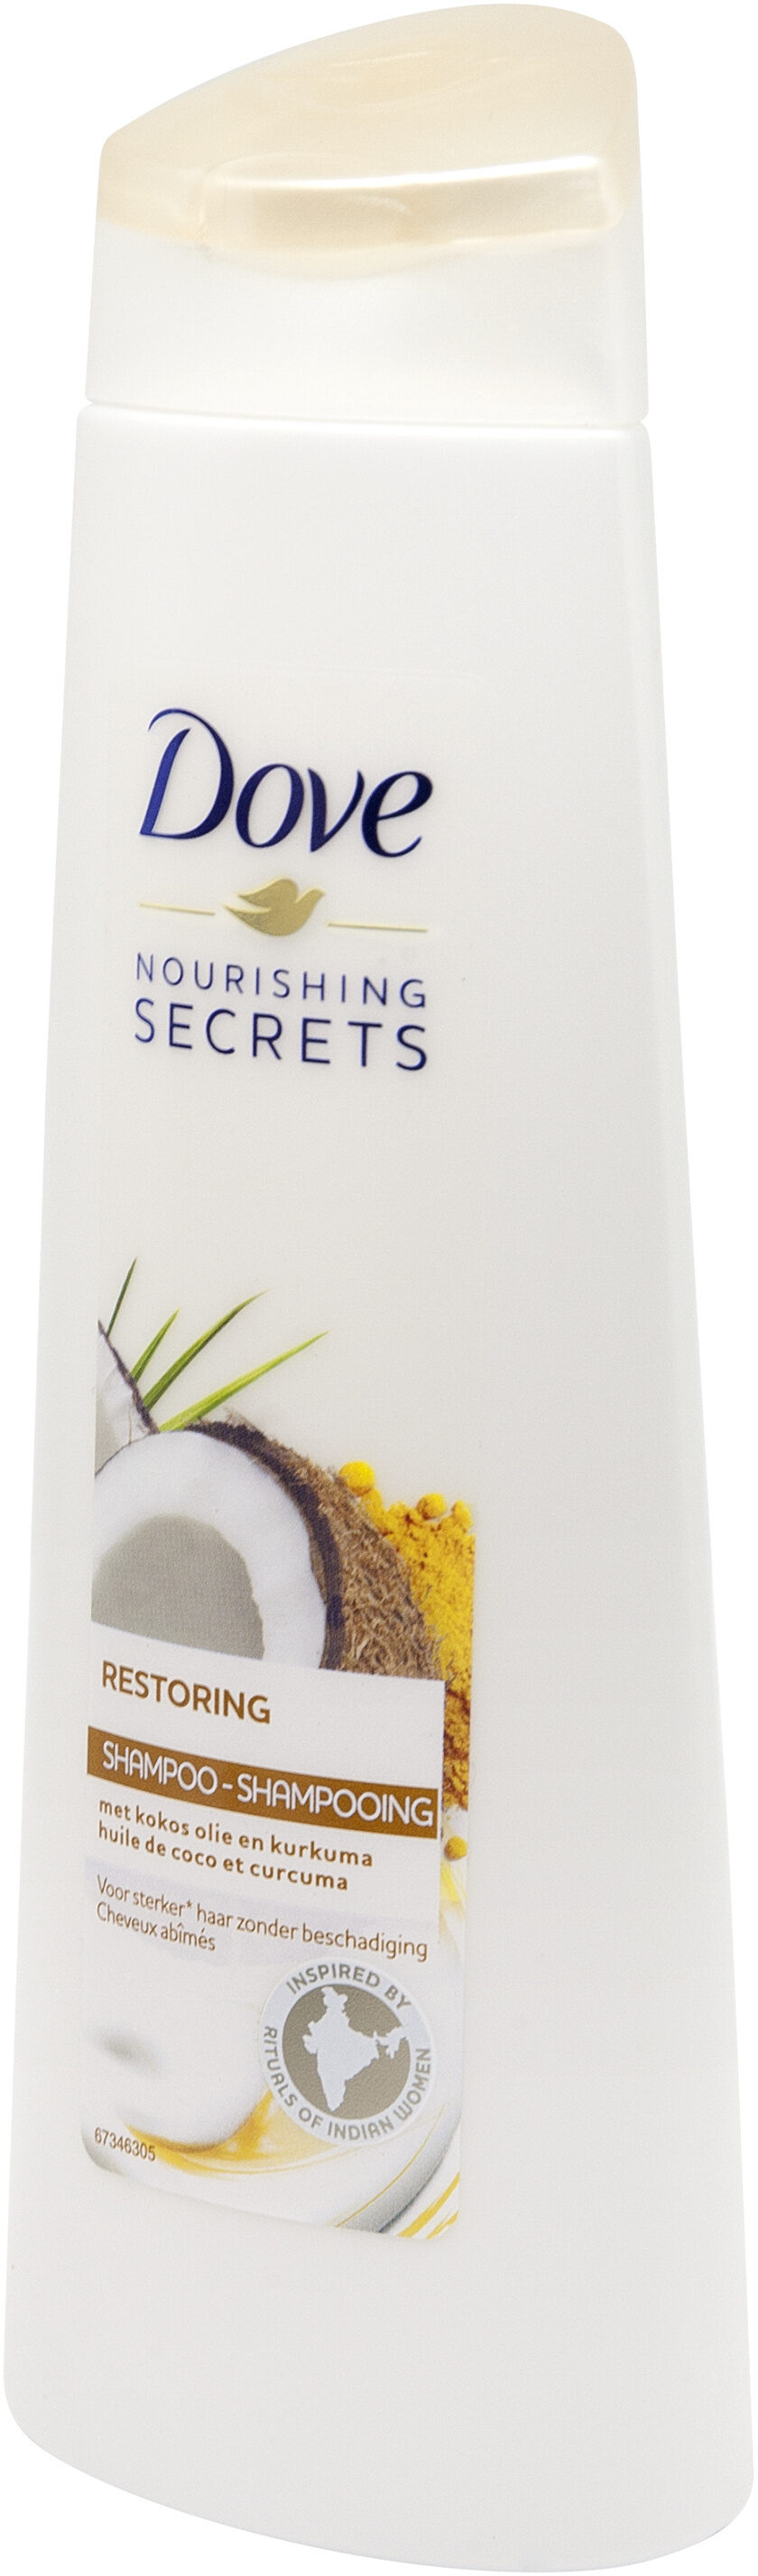 Dove Nourishing Secrets Shampoing Restoring Coco - Product - fr